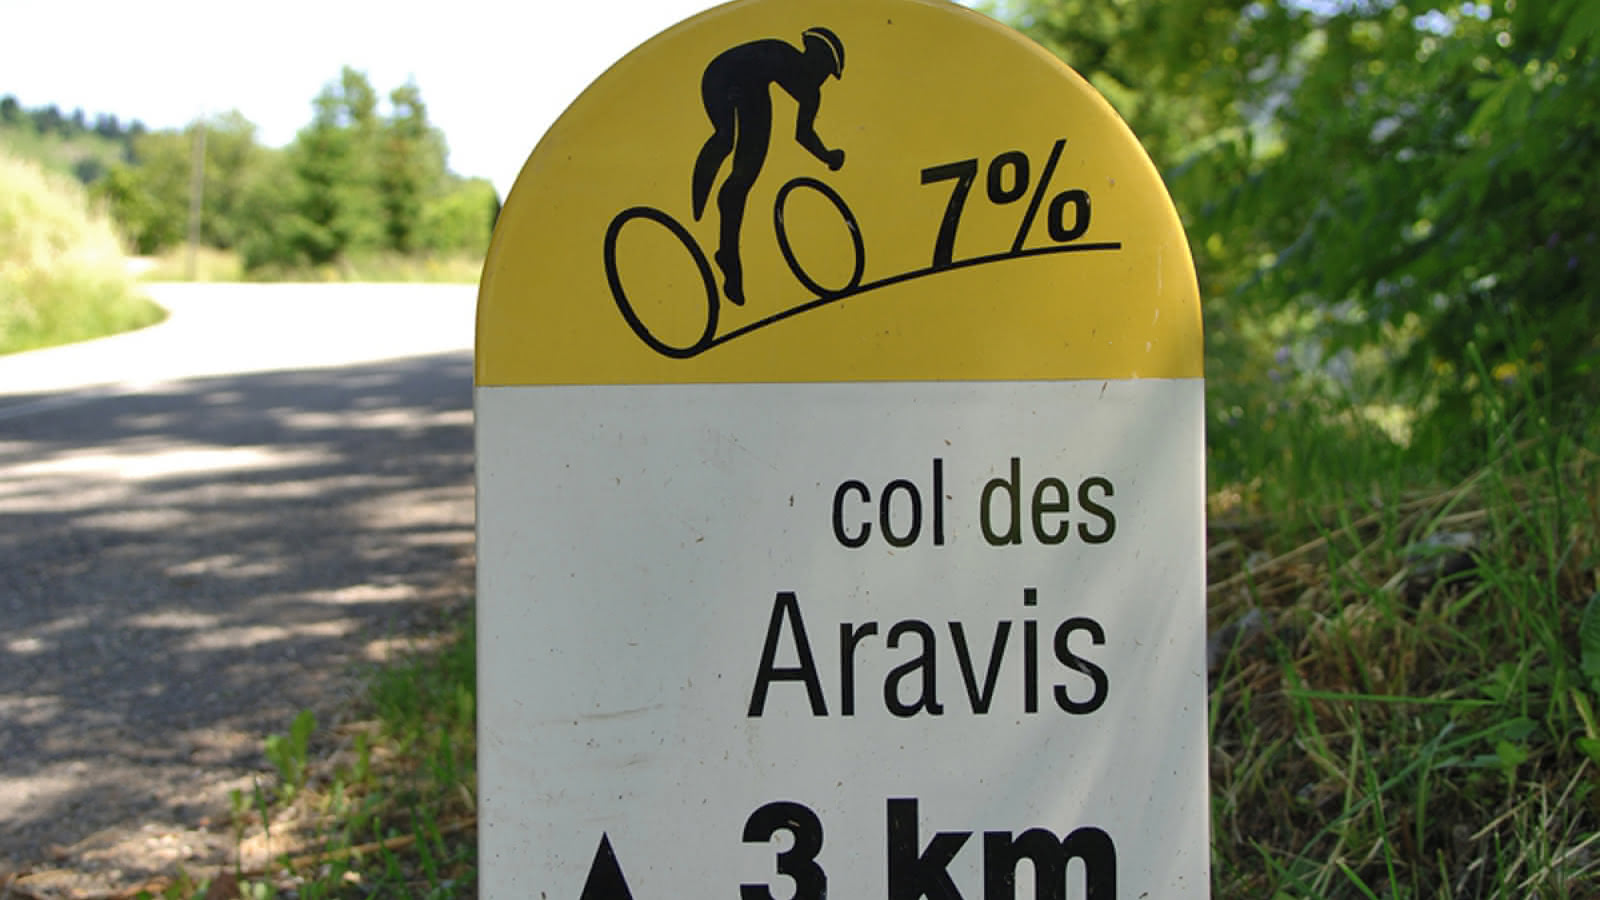 Col des Aravis - borne